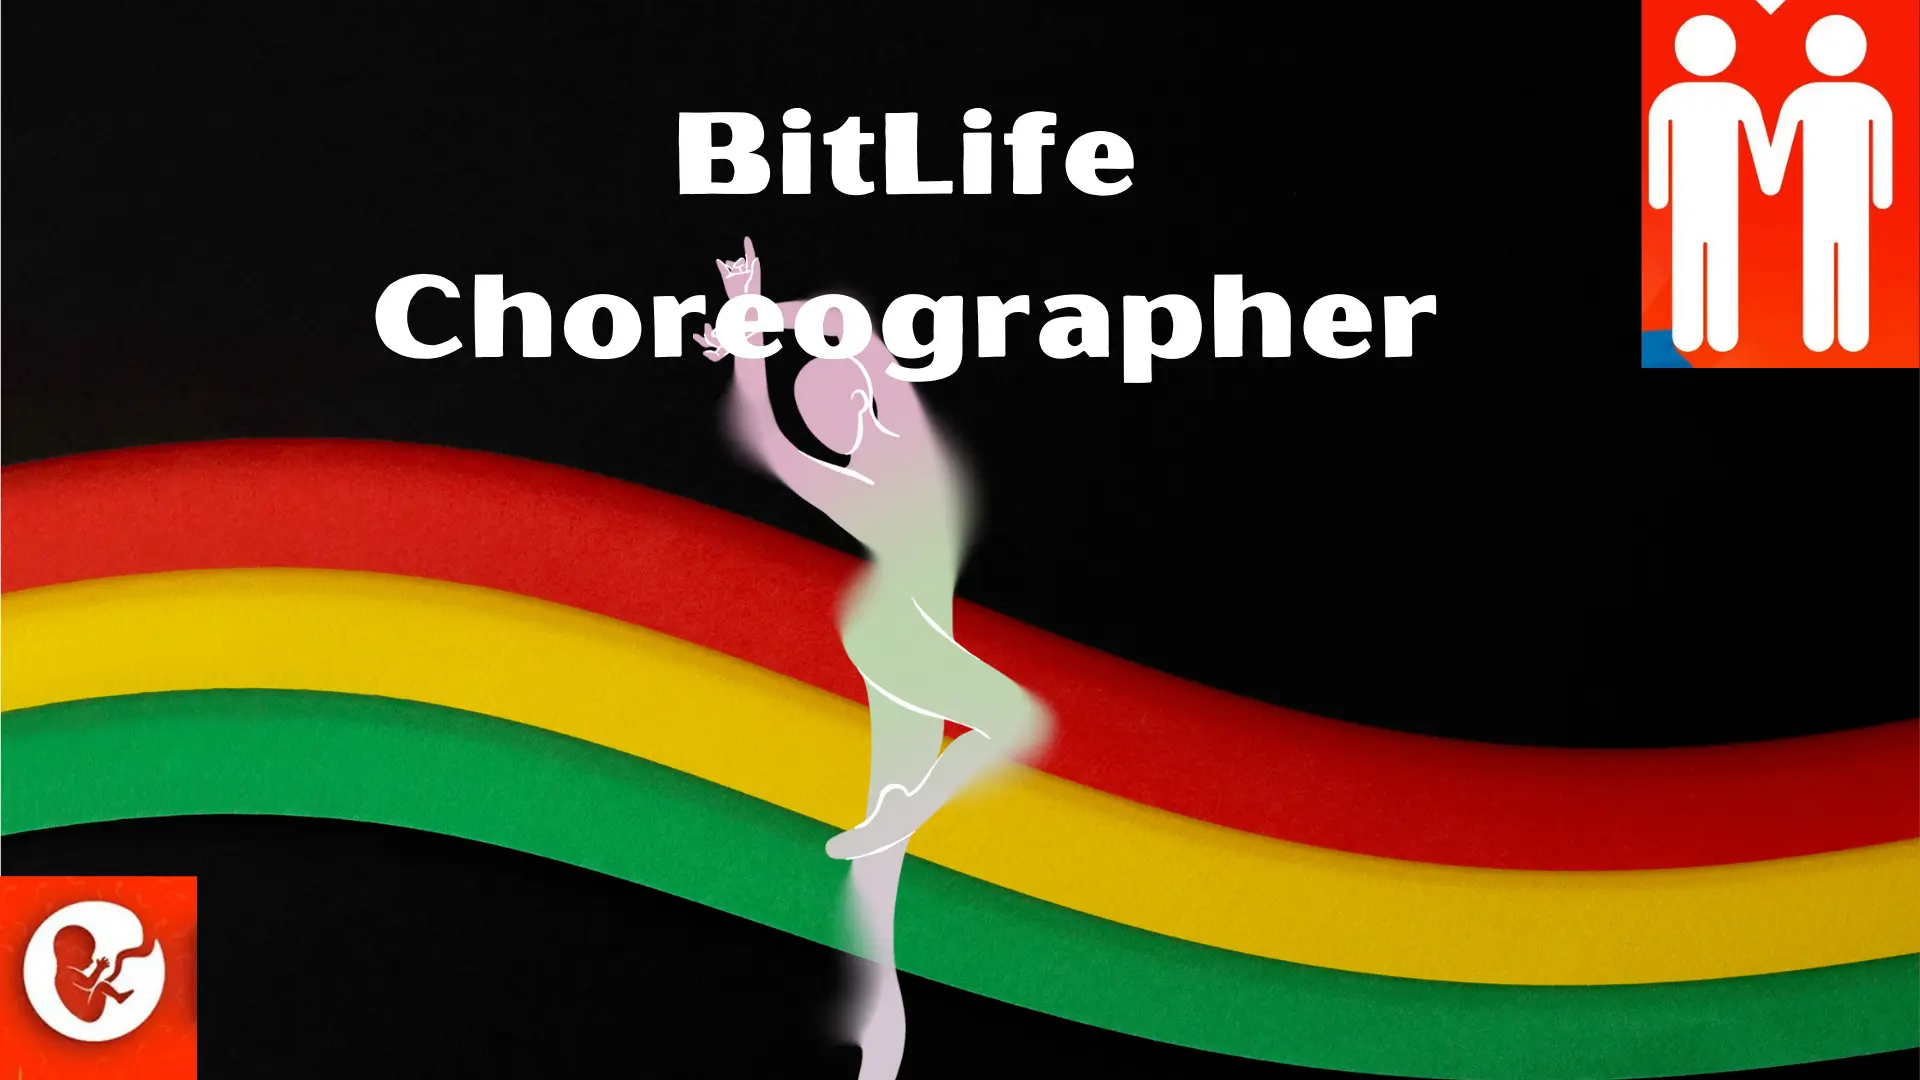 BitLife Choreographer